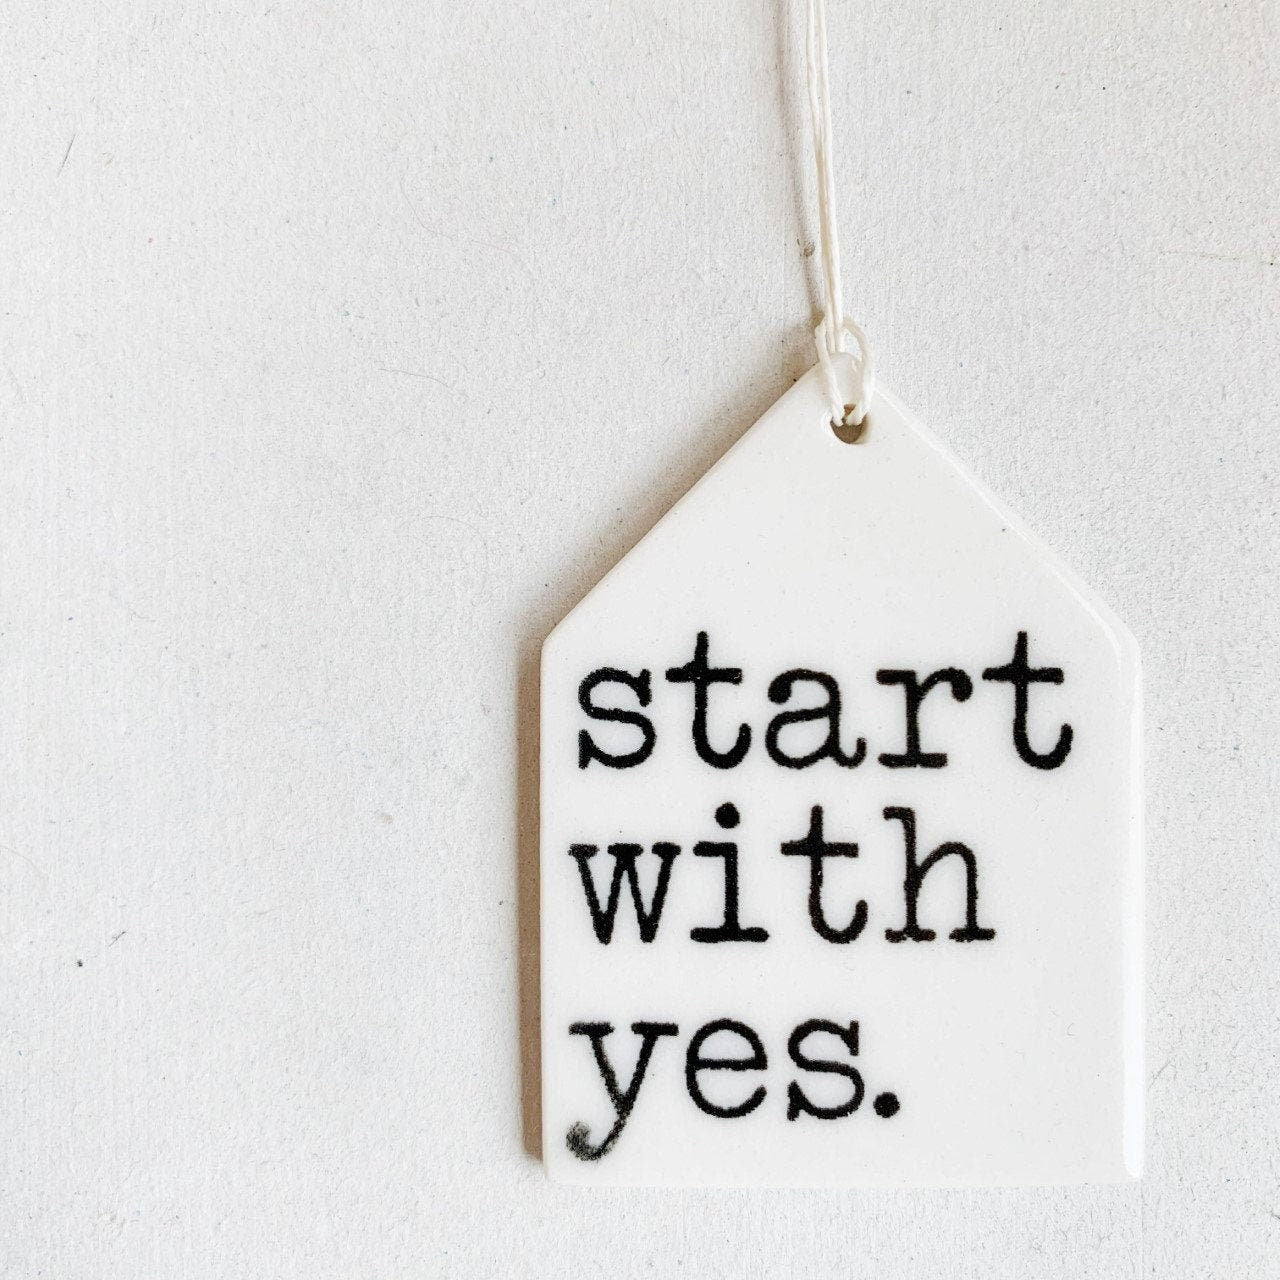 start with yes | start with yes quote | yes quote | ceramic wall tag | gift for friend | minimalist design | home decor | graduation gift